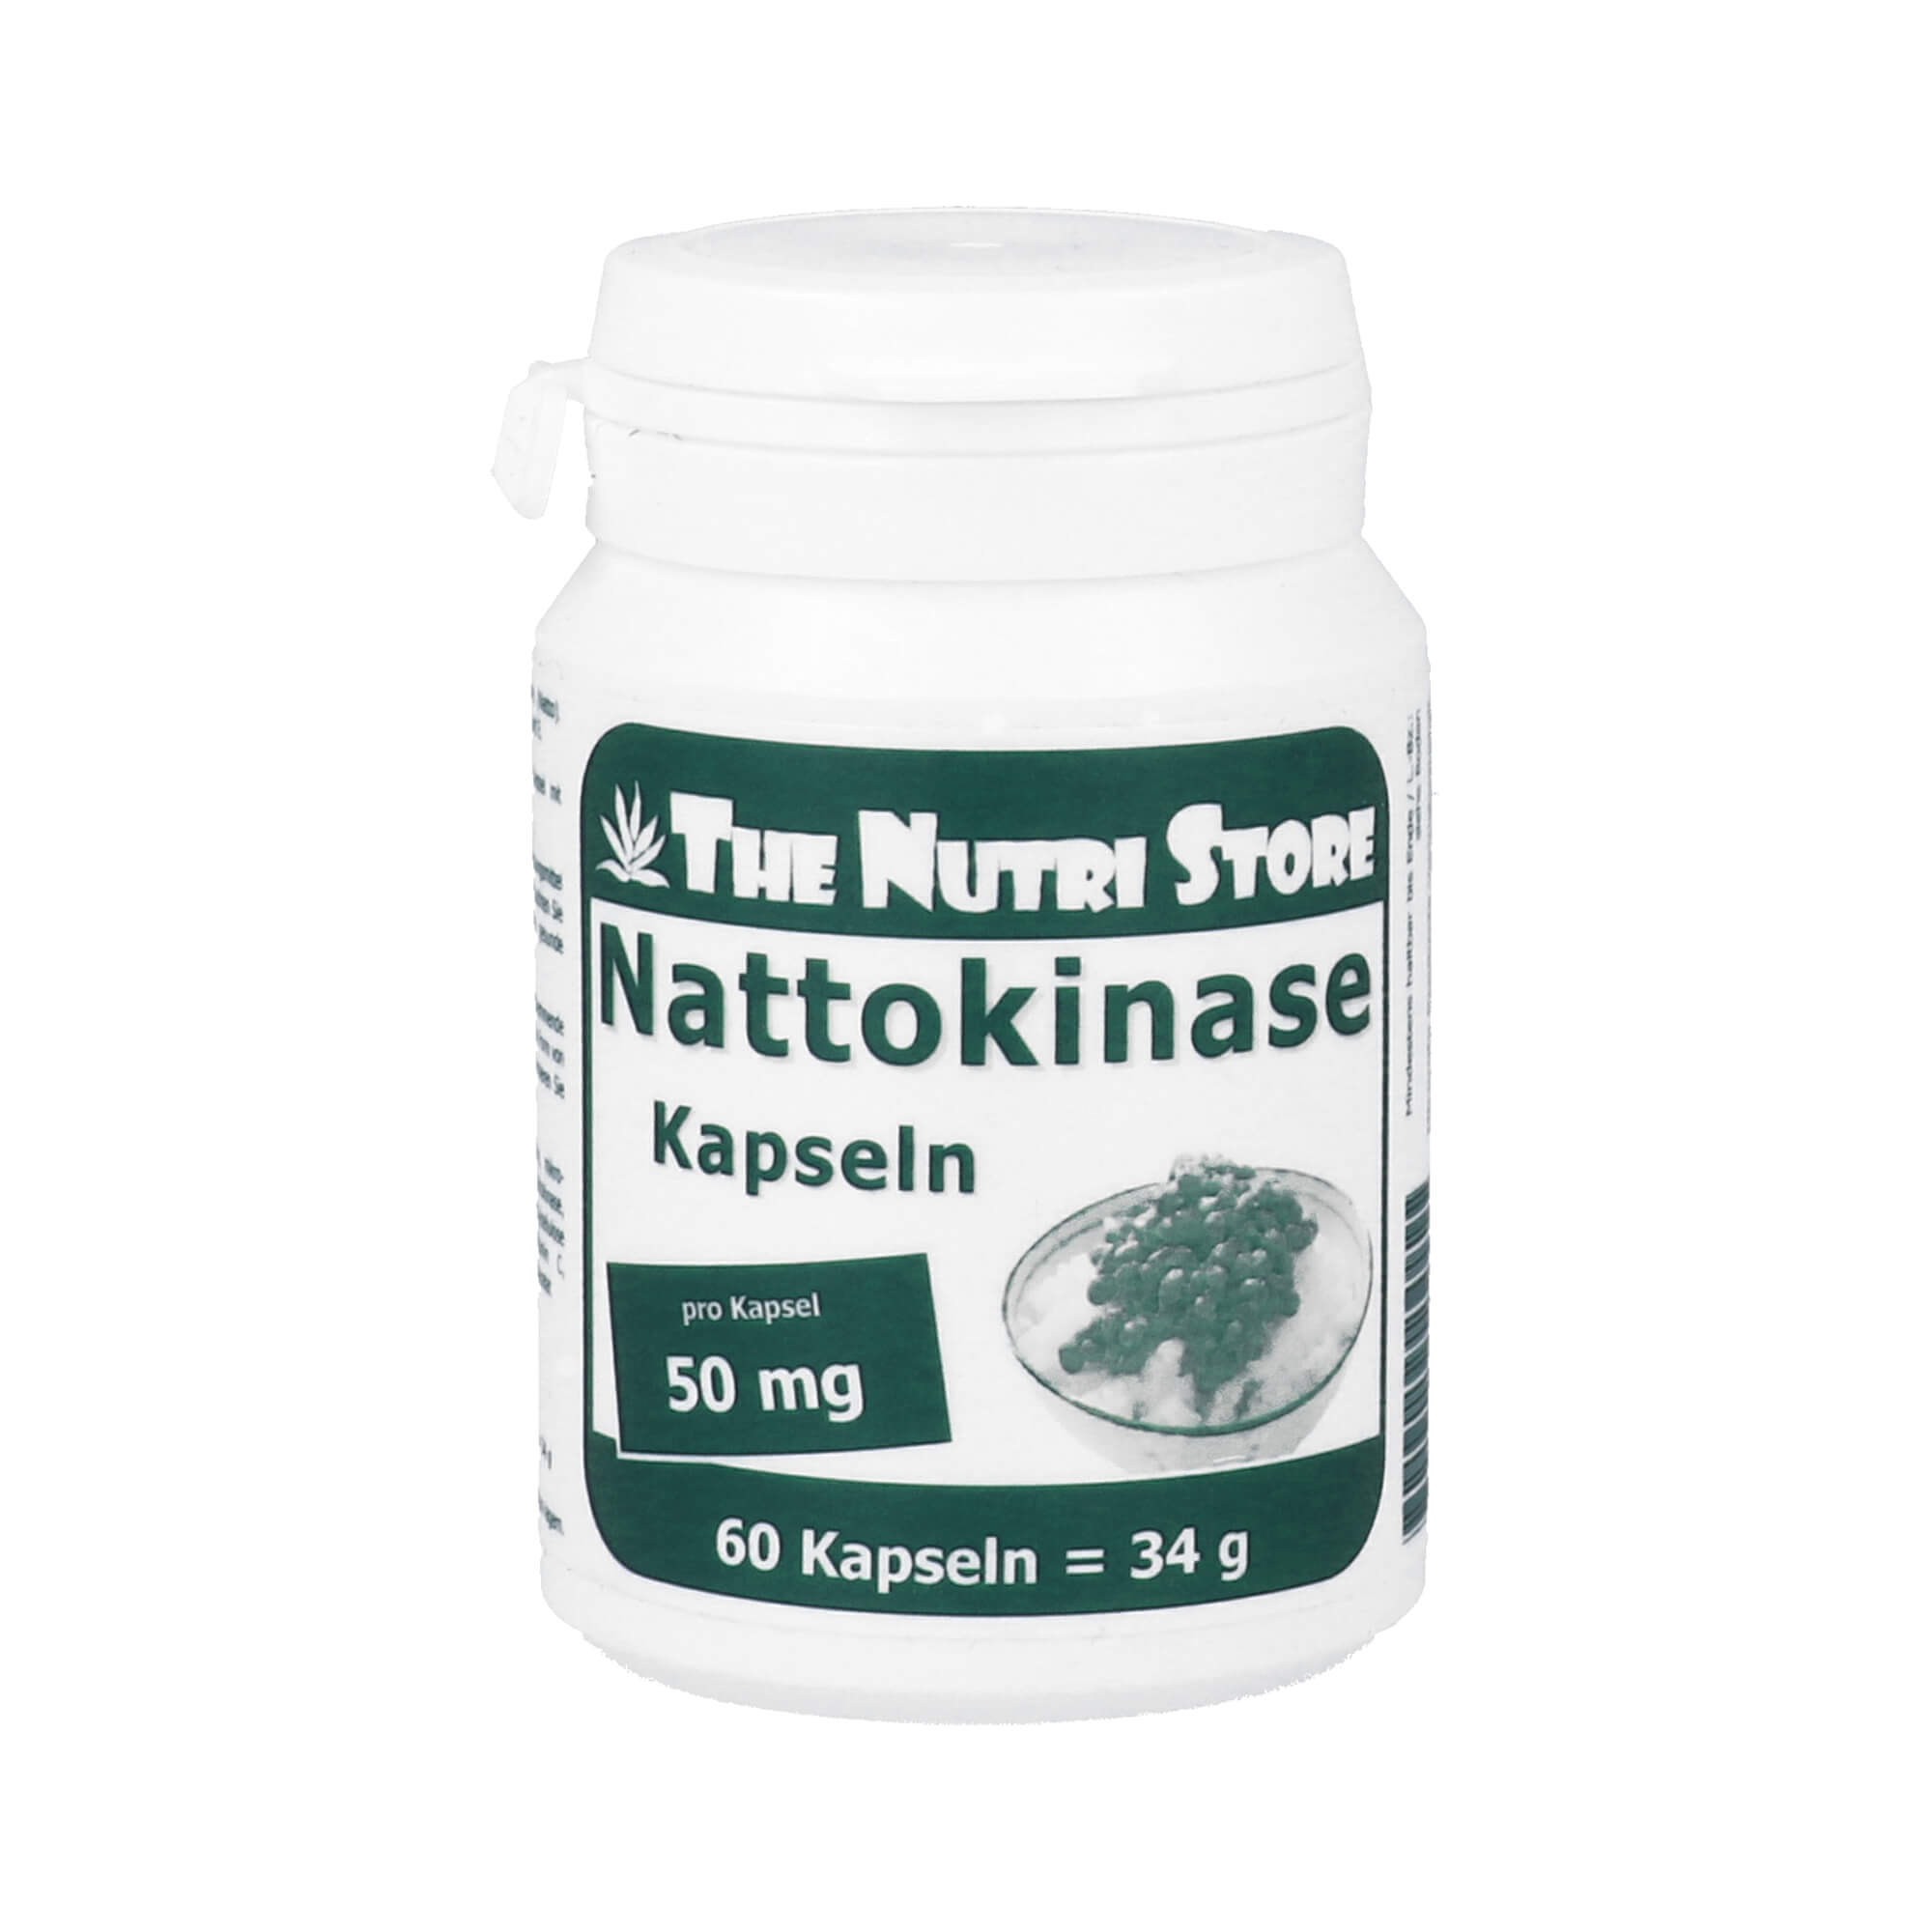 Nahrungsergänzungsmittel mit Nattokinase.